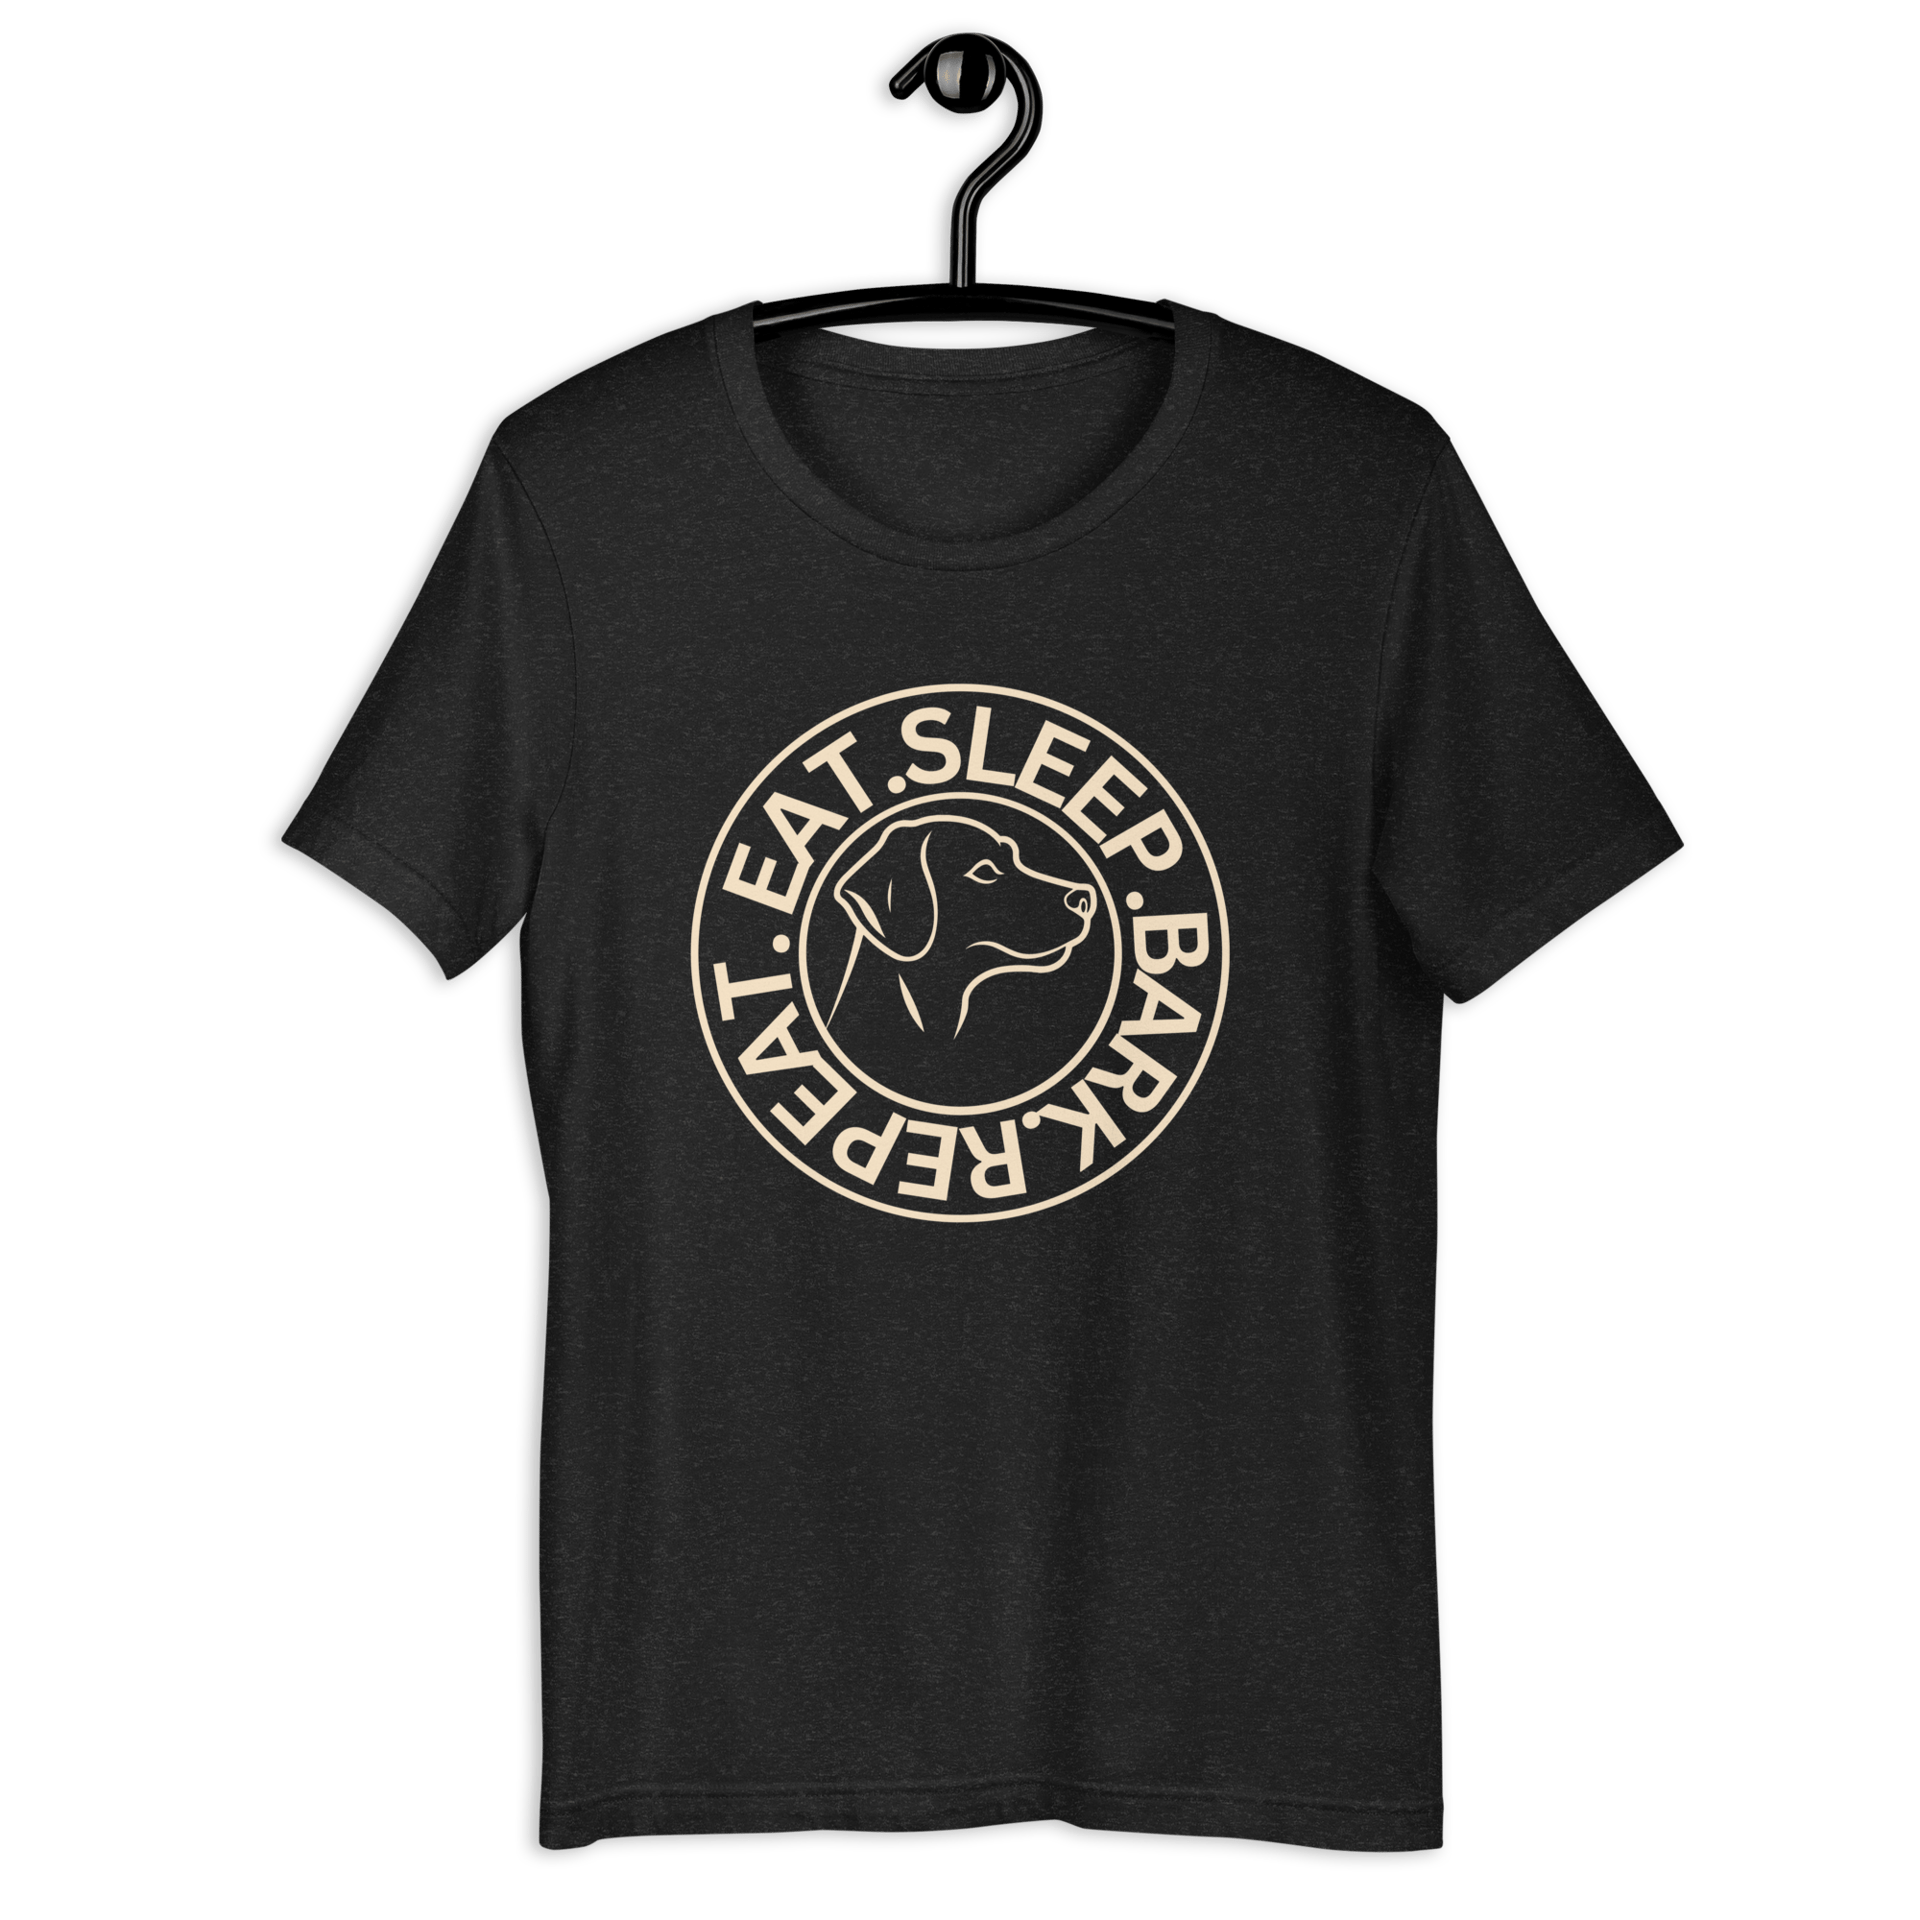 Eat Sleep Bark Repeat Labrador Retriever Unisex T-Shirt. Black